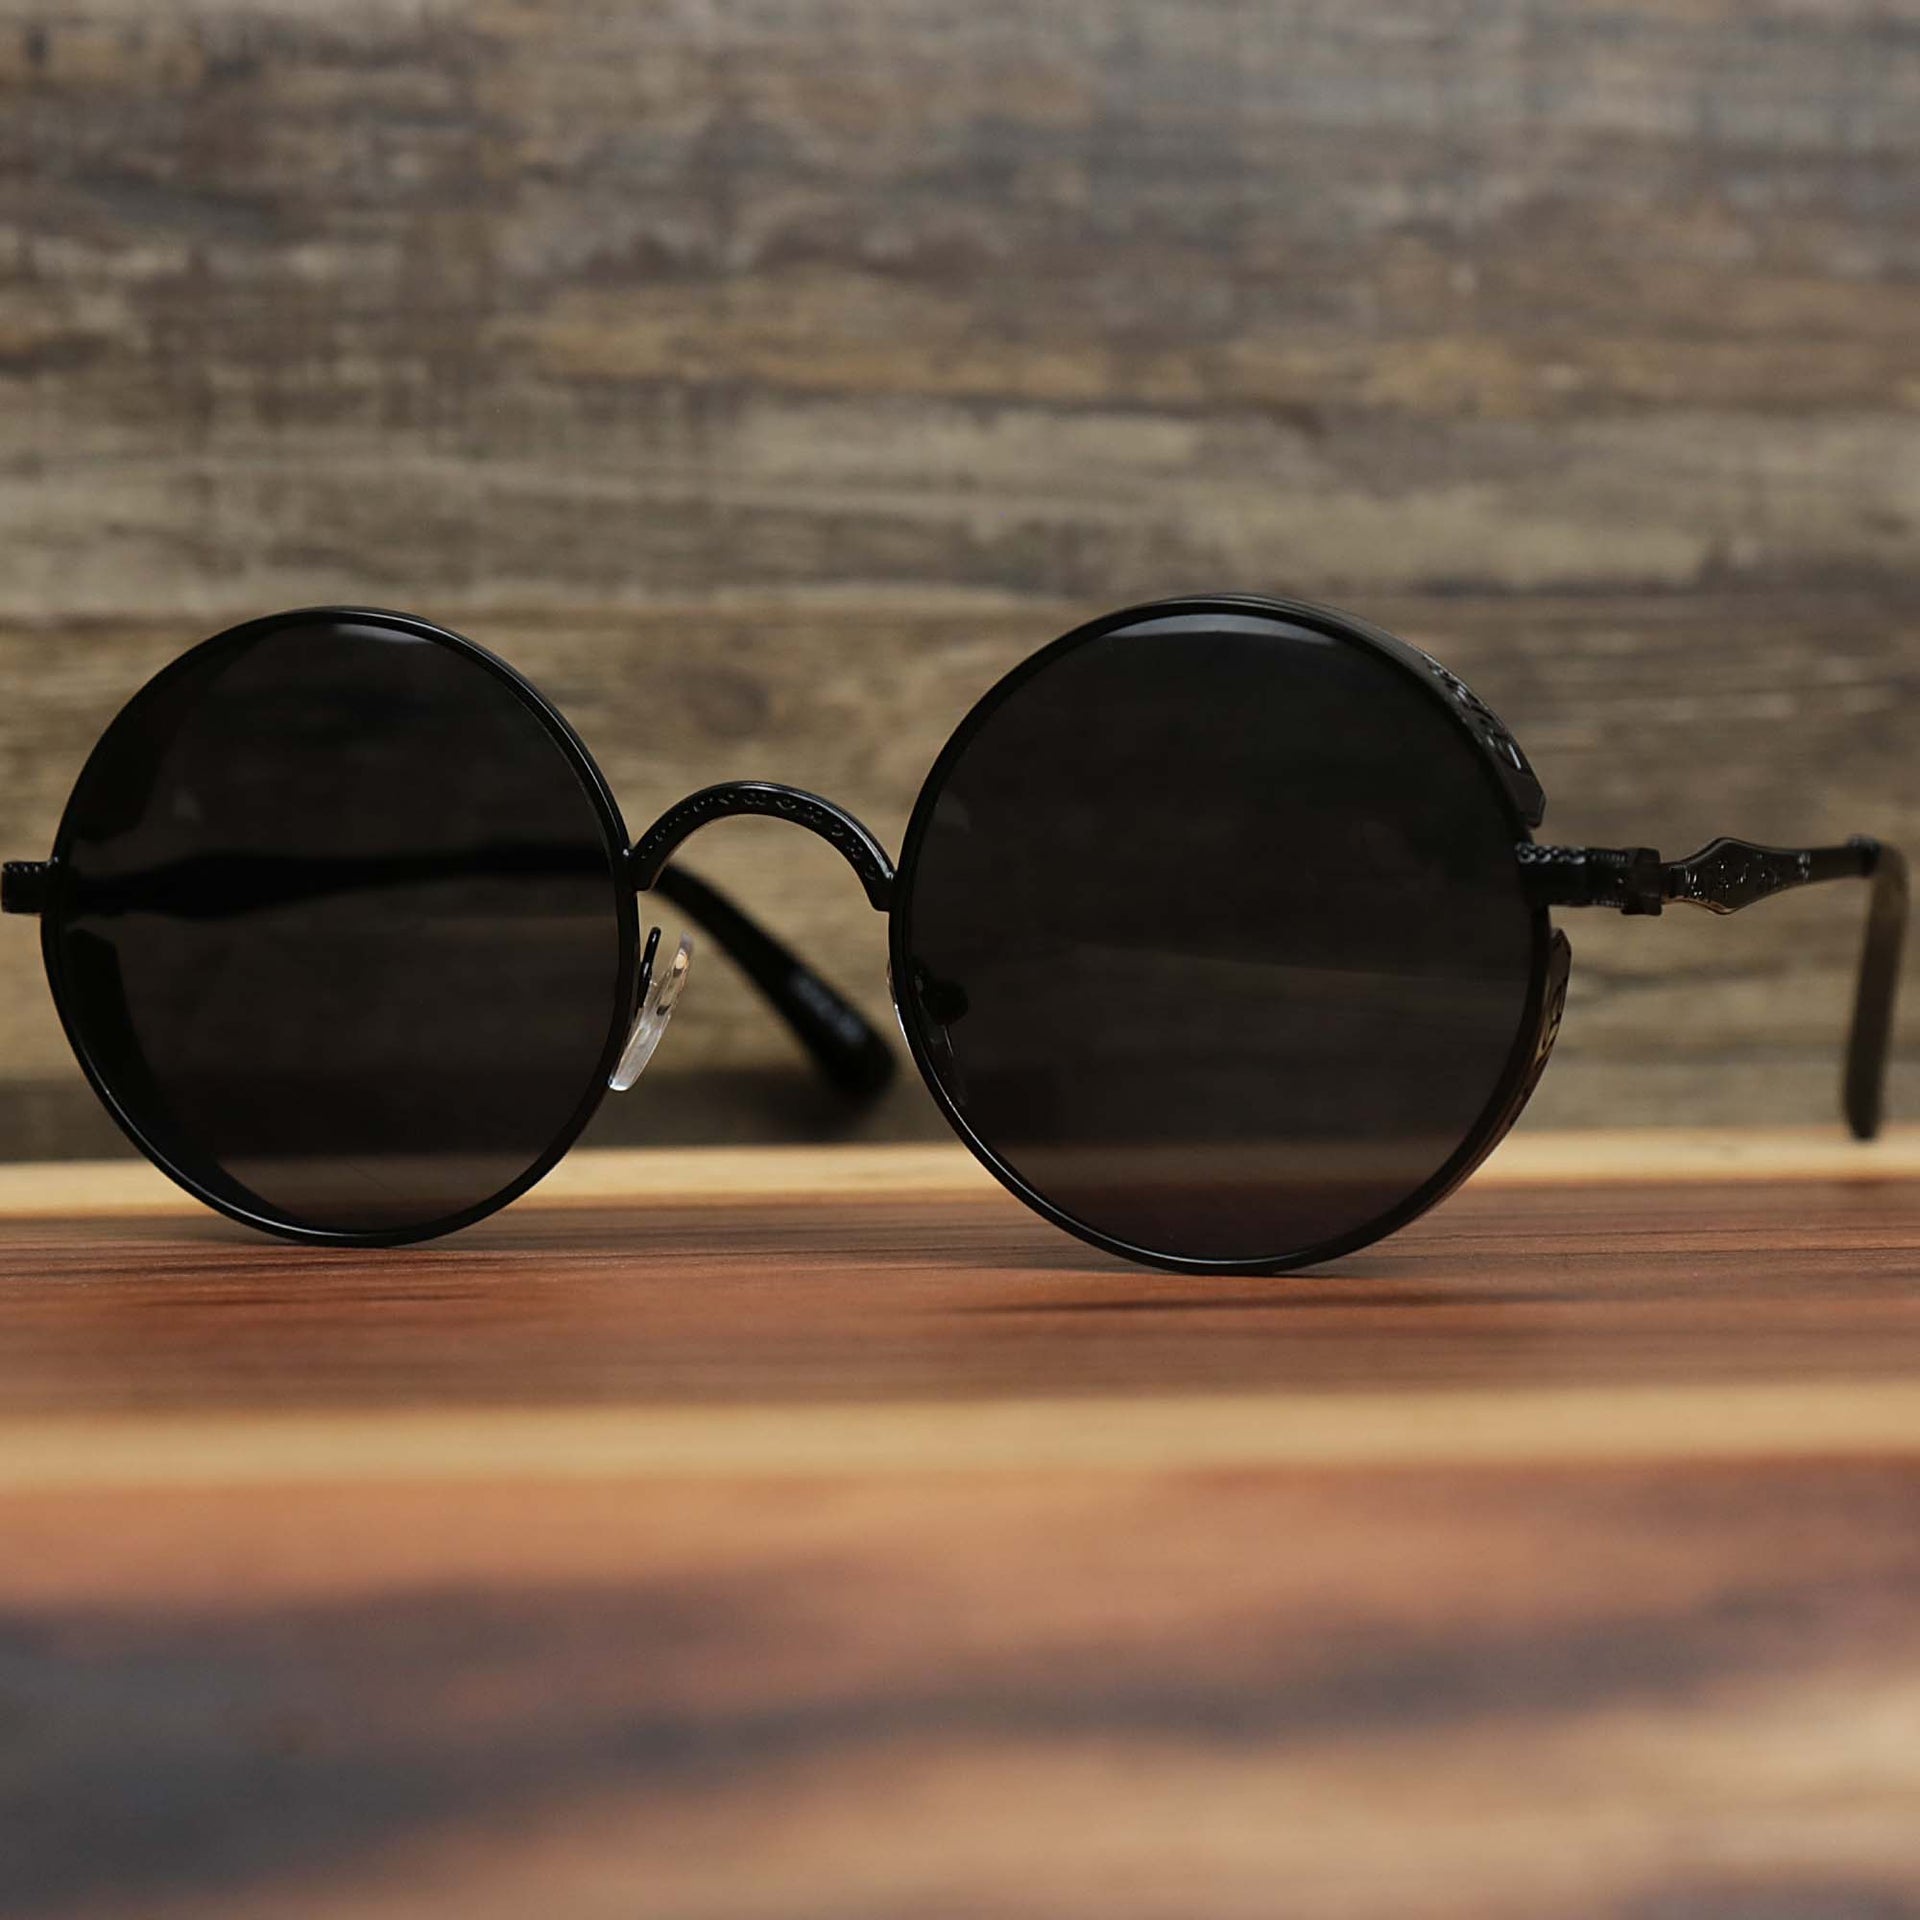 The Round Frame Arched Bridge Black Lens Sunglasses with Black Frame